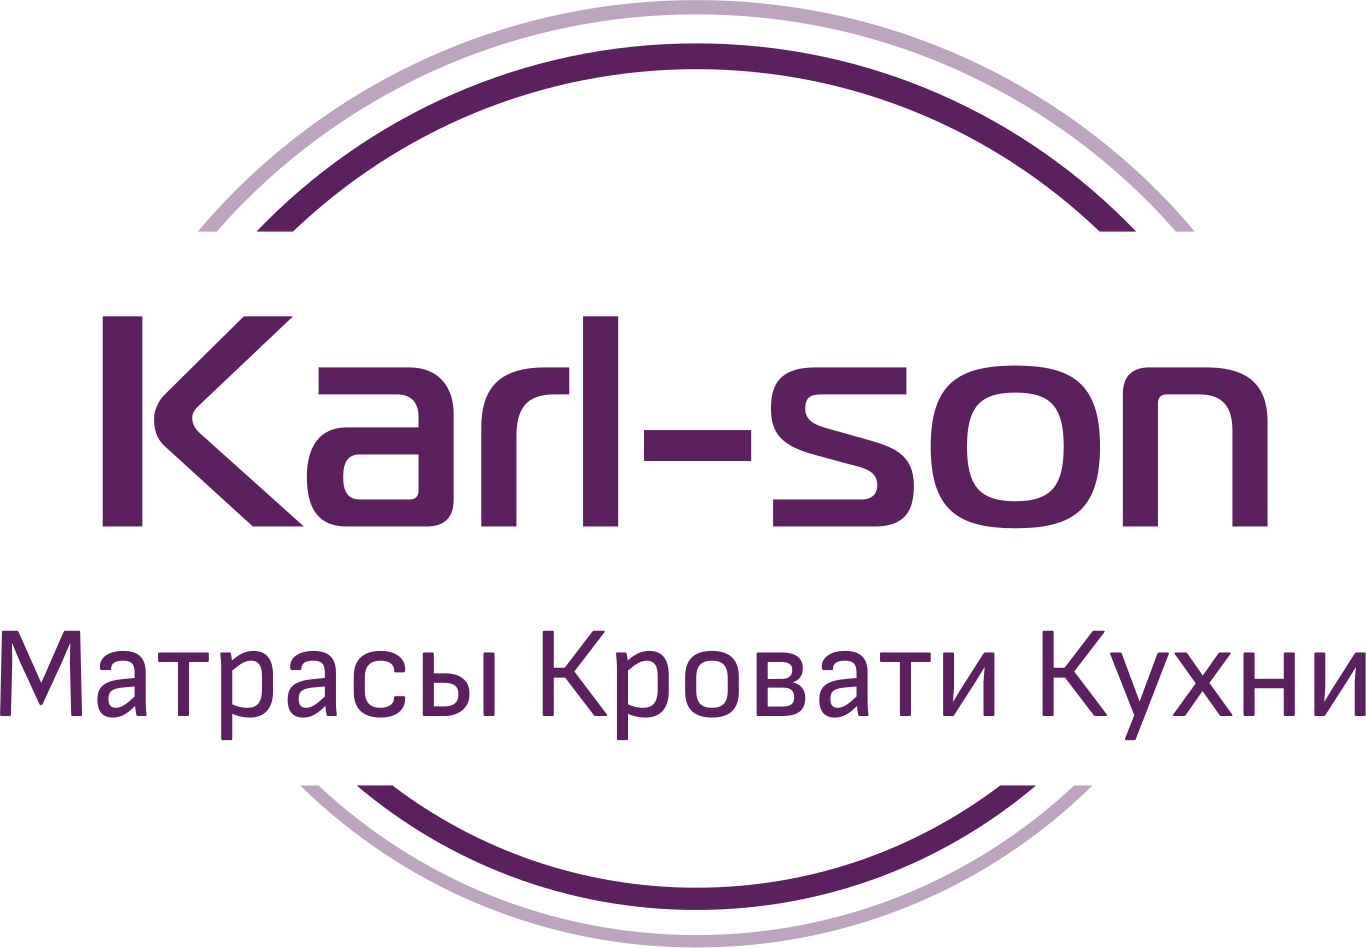 Karl-Son.ru Матрасы Кровати Кухни